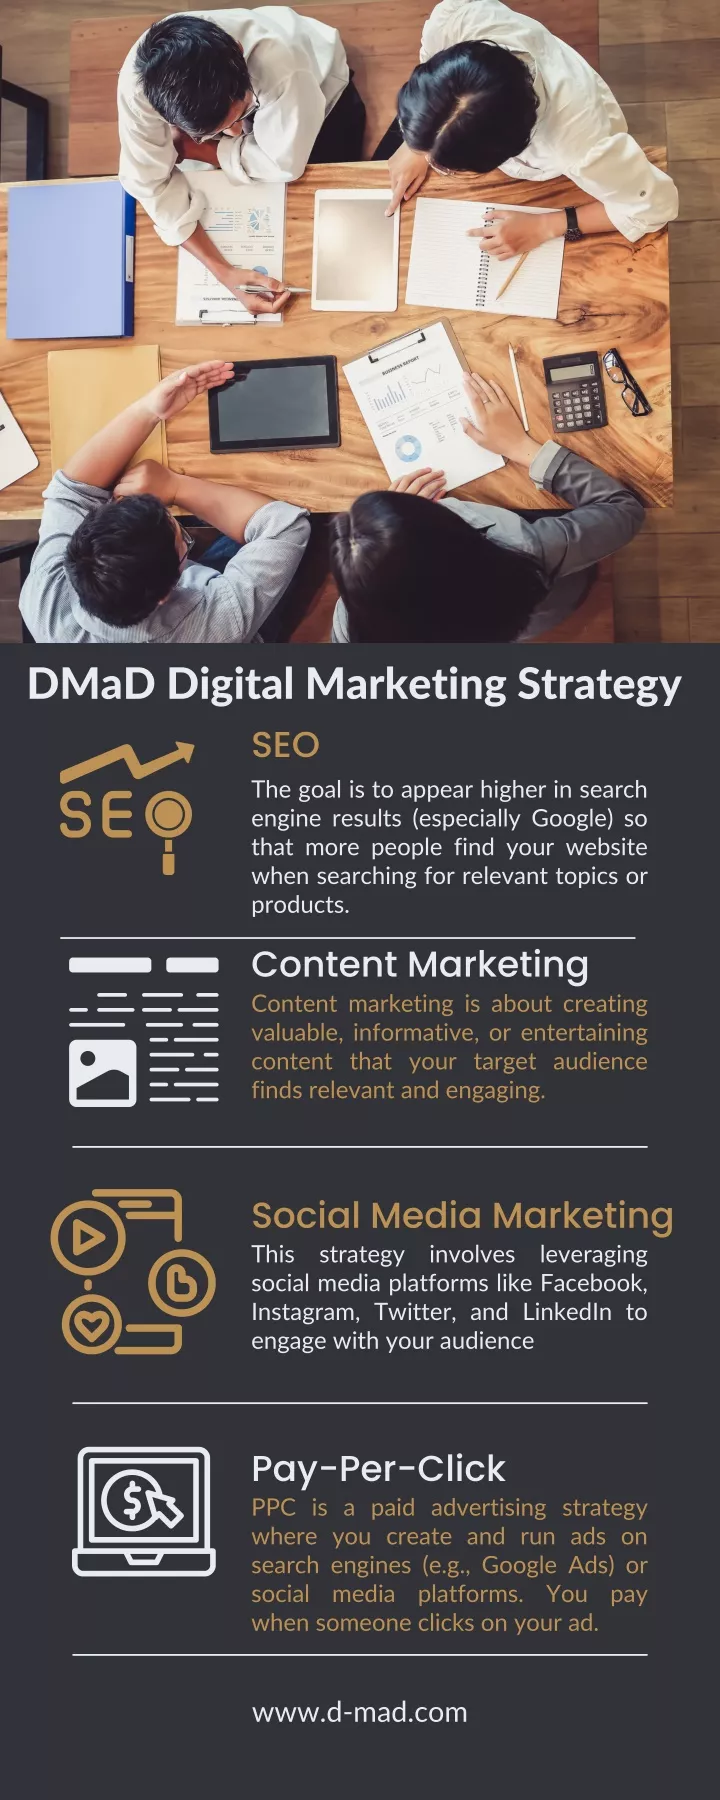 dmad digital marketing strategy seo the goal